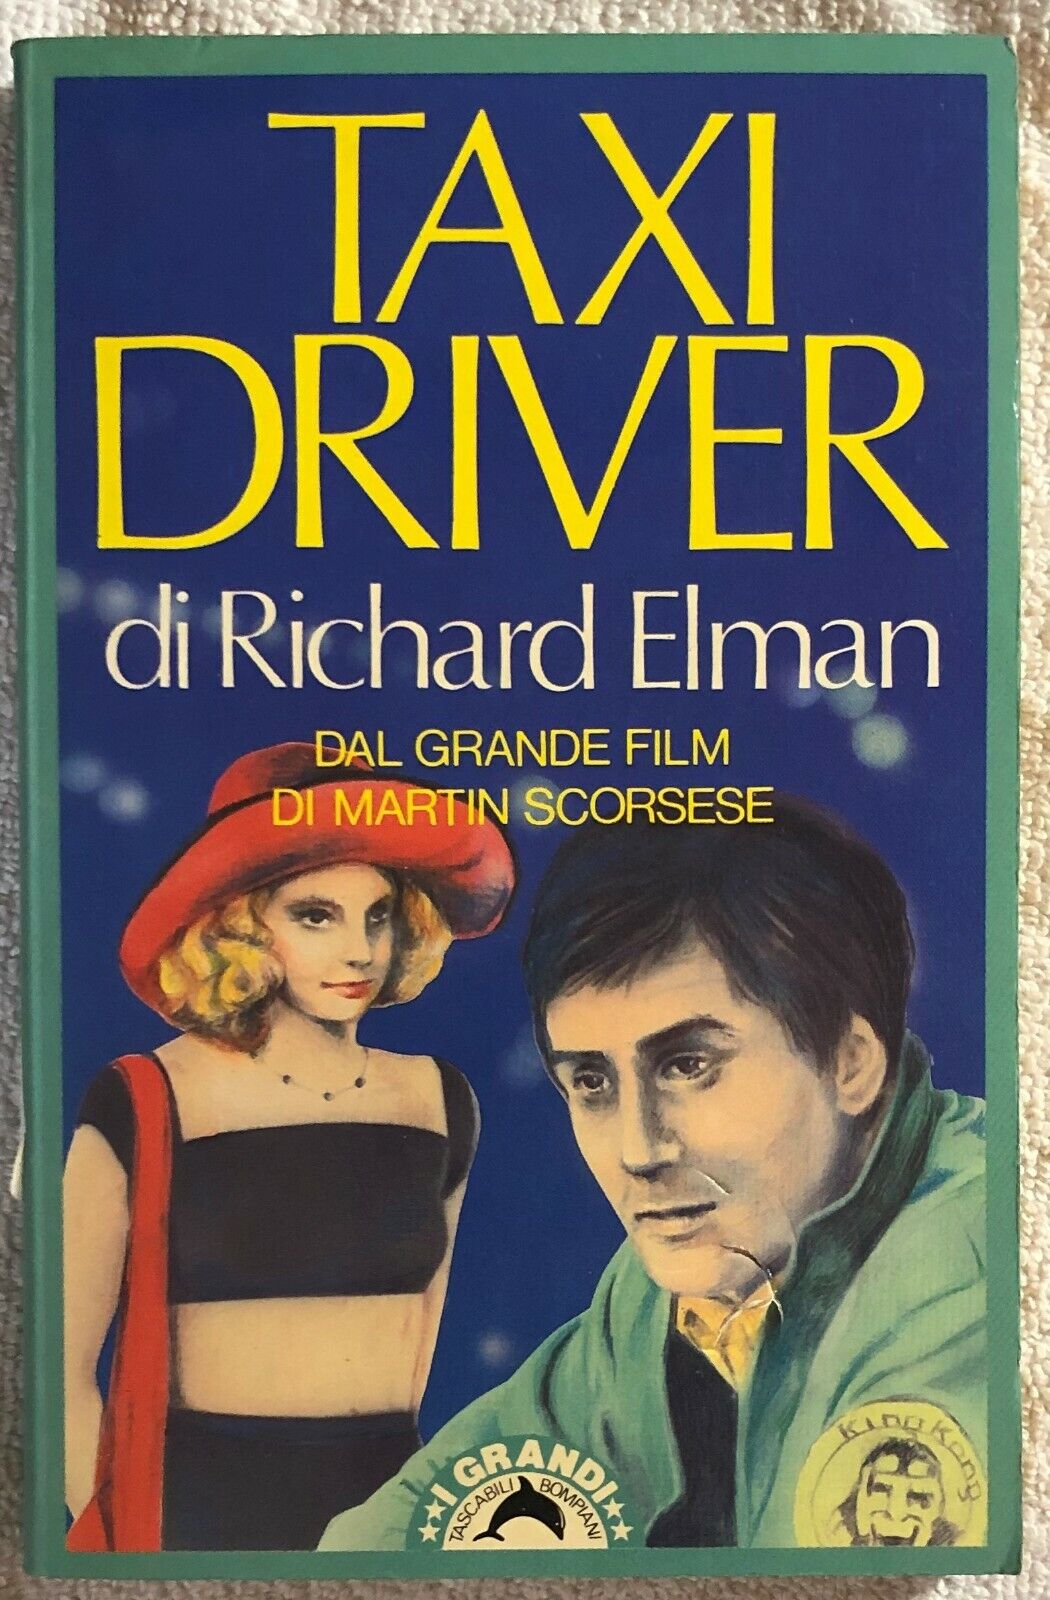 Taxi driver di Richard Elman,  1988,  Bompiani